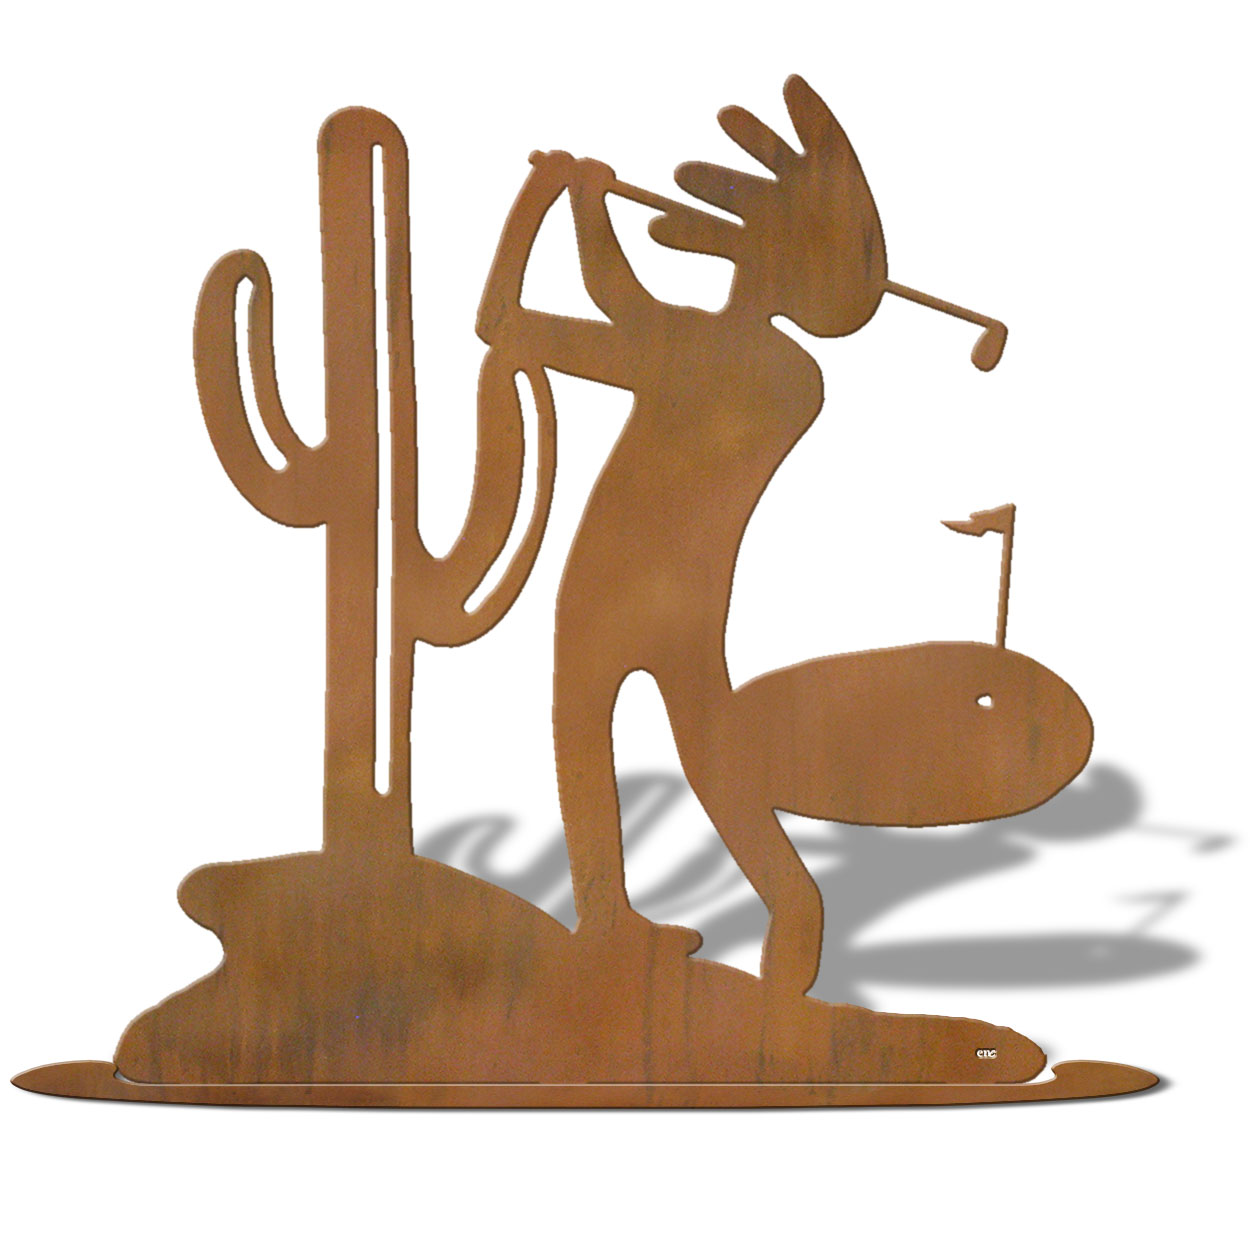 623019r - Tabletop Art - 19in x 19in - Golfer Cactus - Rust Patina